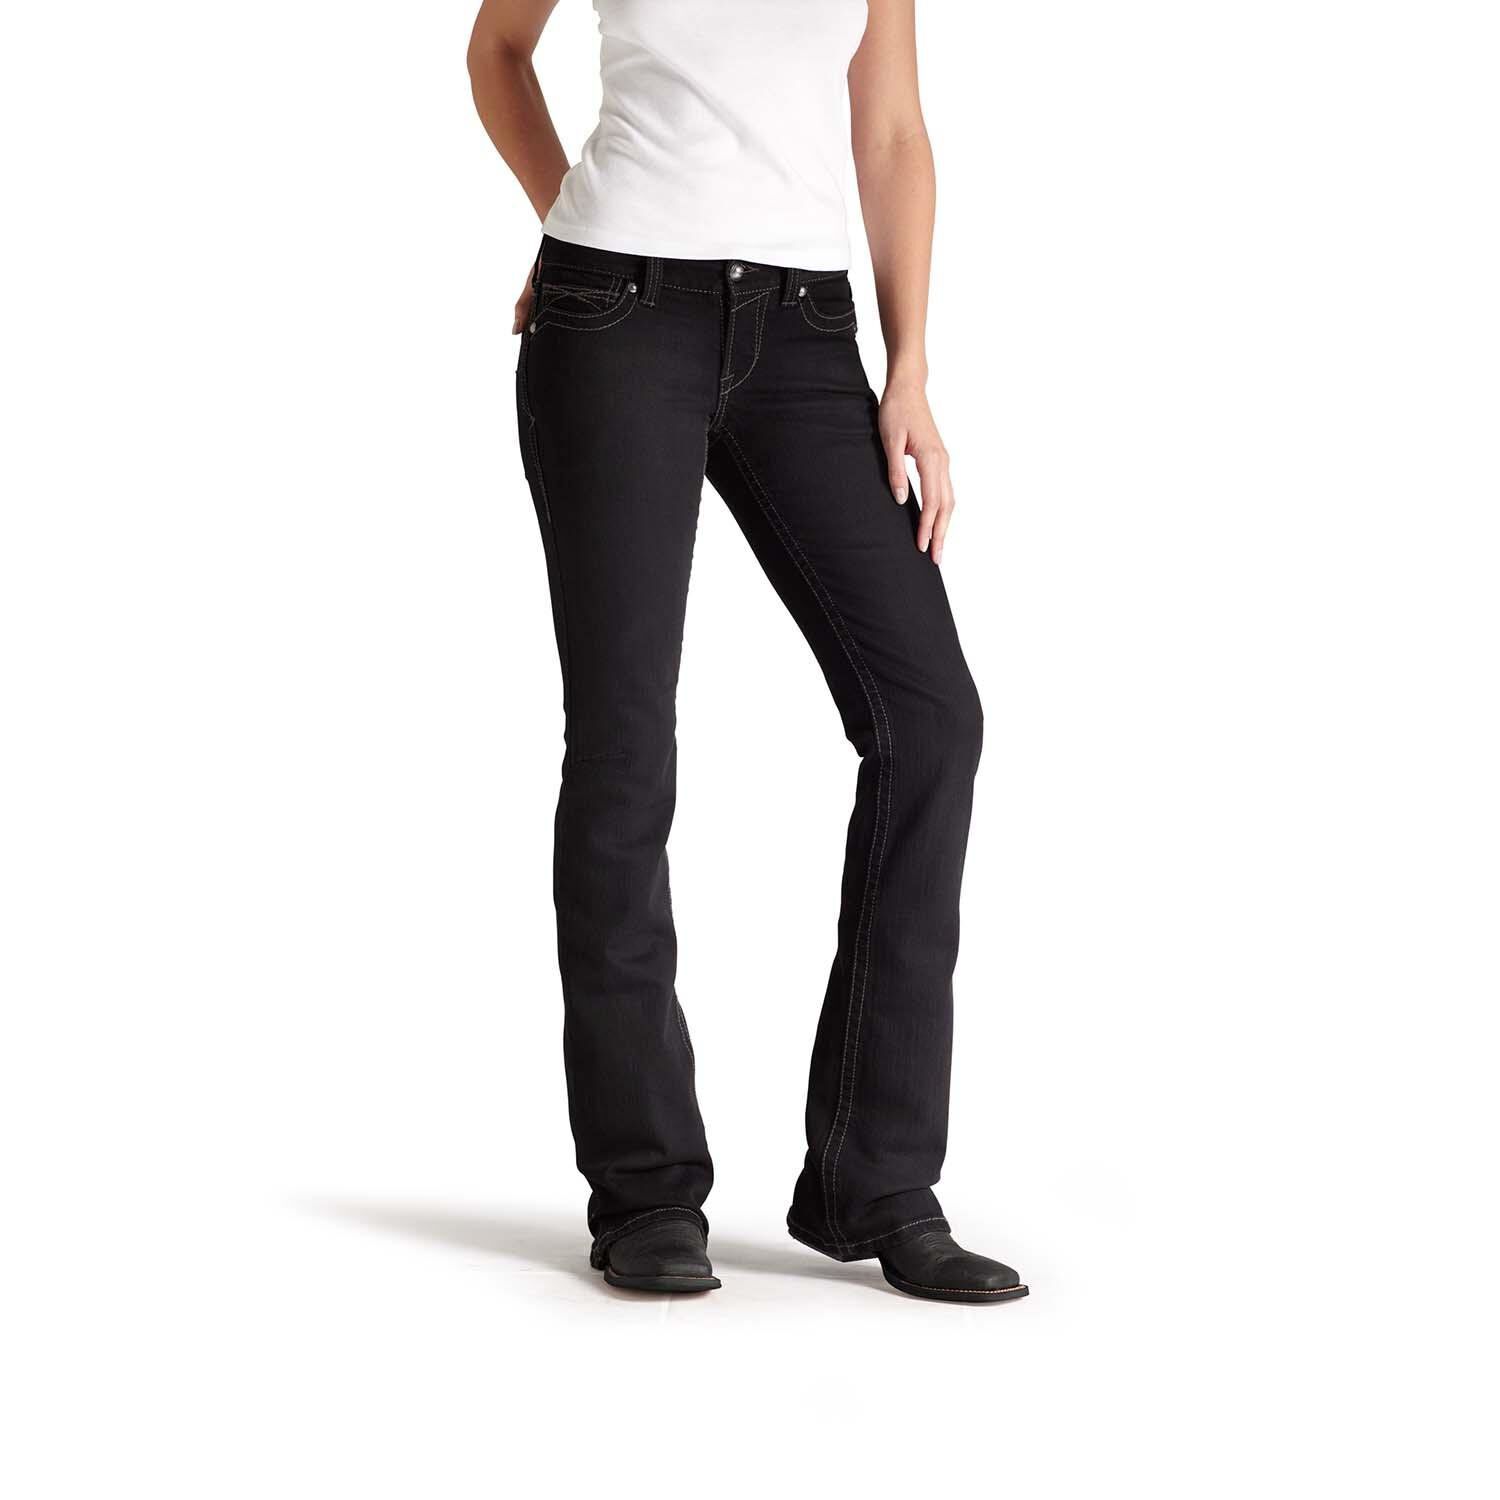 Ariat Women S Jeans Size Chart